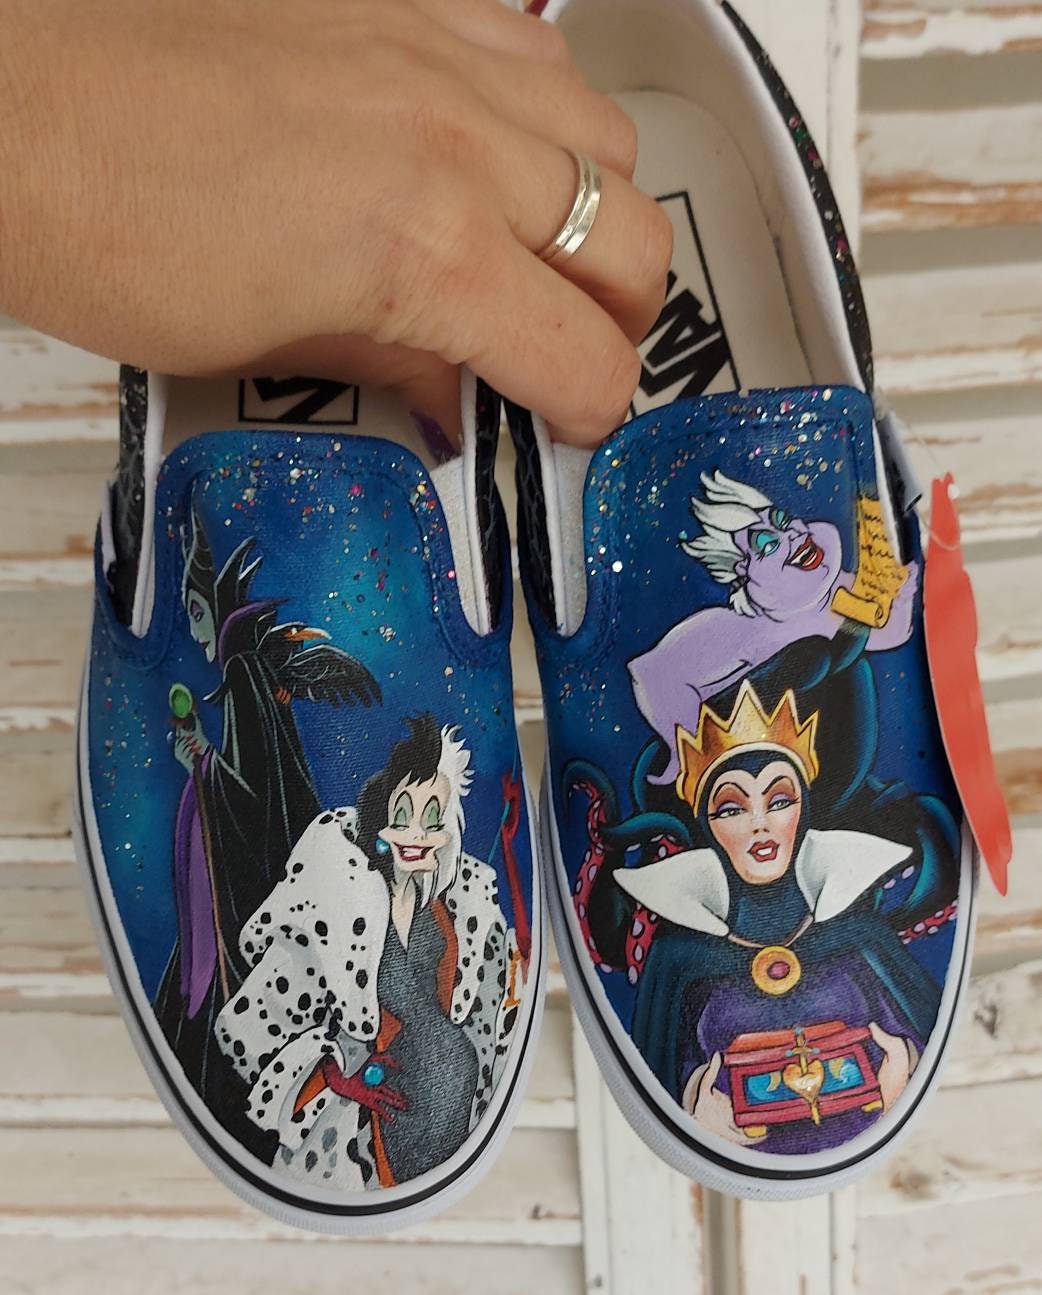 Cruella De Vil's shoes by e1venbeauty on DeviantArt